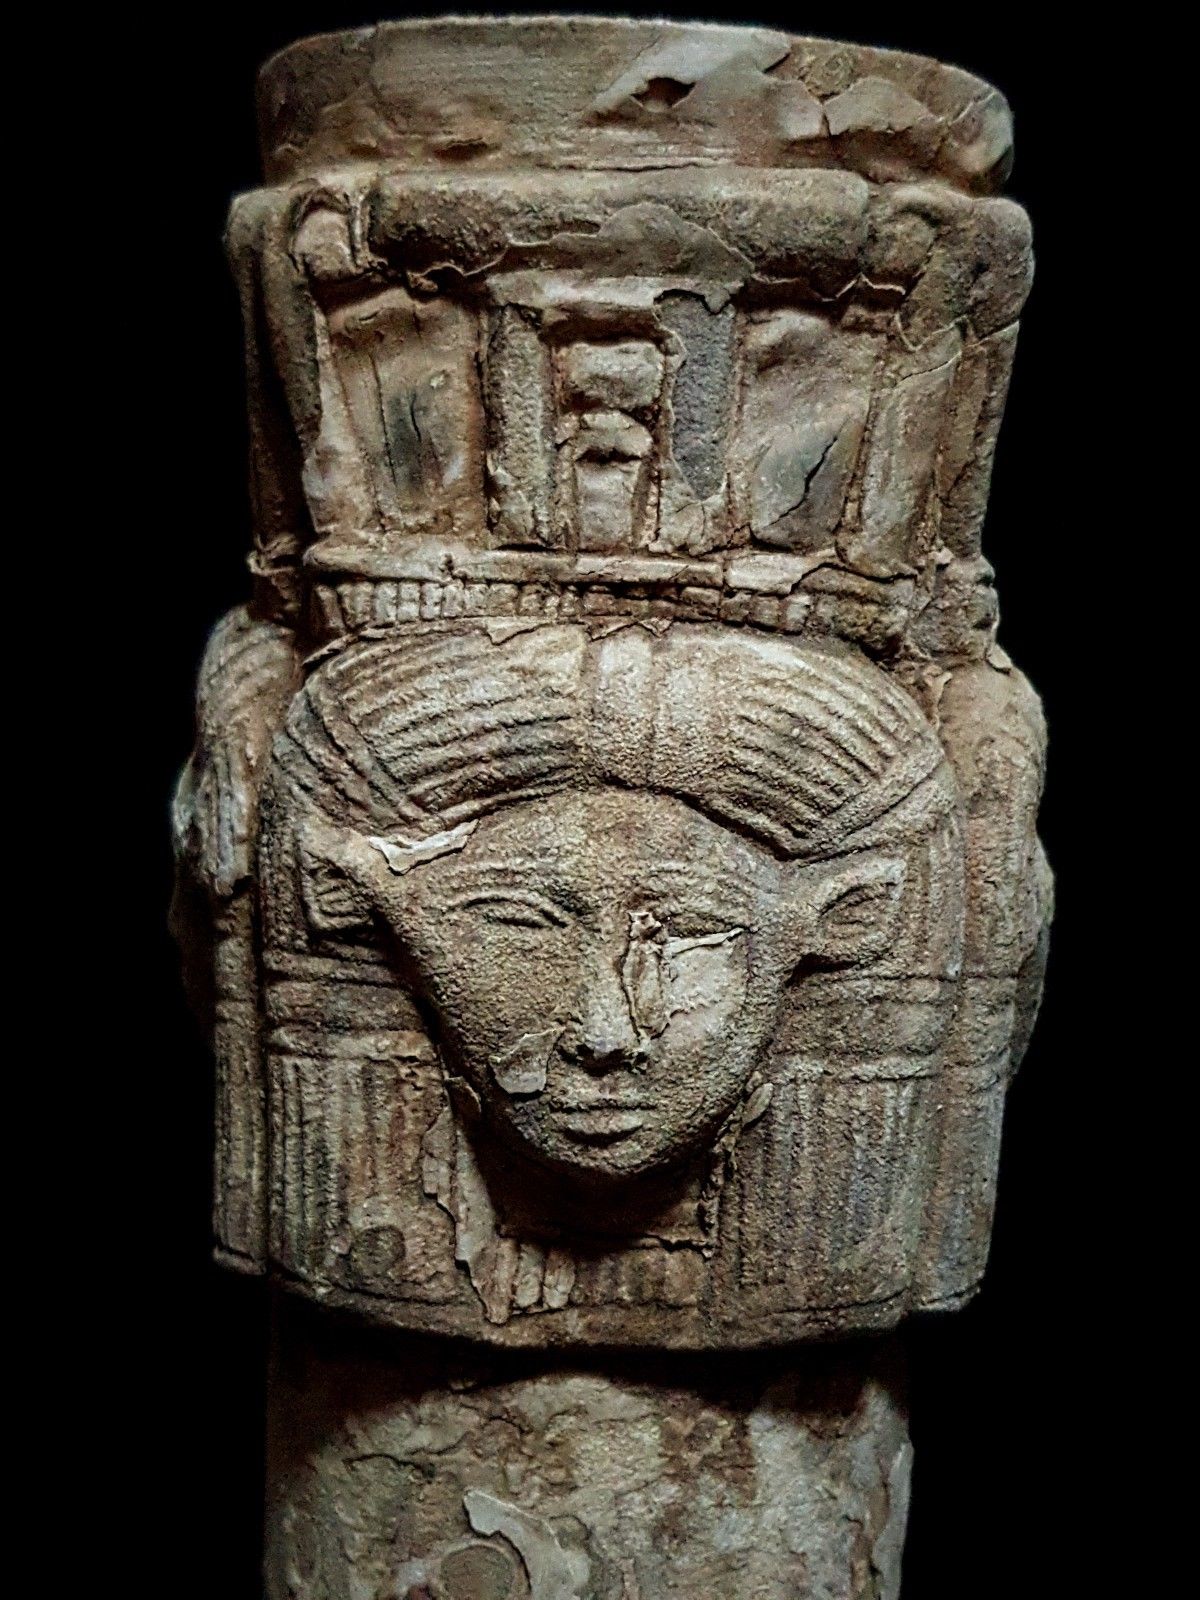 20 - - Egyptian stone statue of Hathor, known in earlier Mesopotamia as Ninhursag, Ninmah, Ninti, etc.